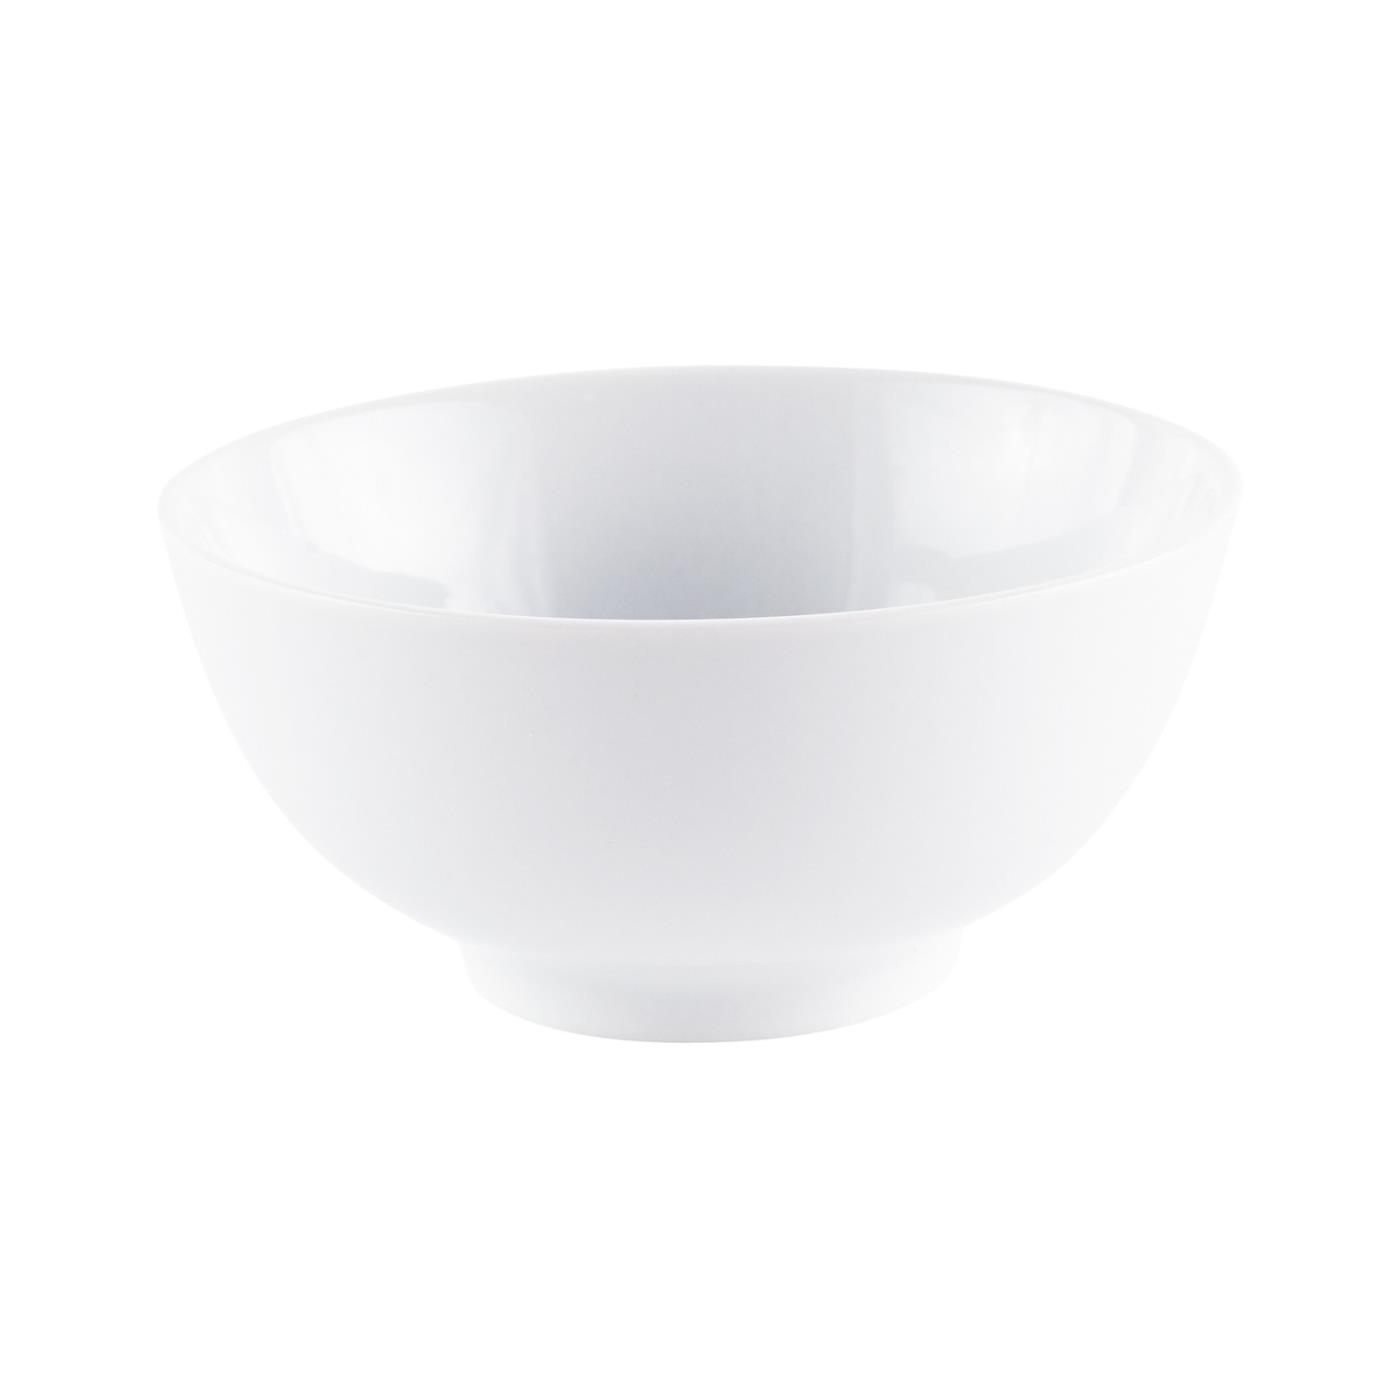 White Ceramic Round Bowl - 6"